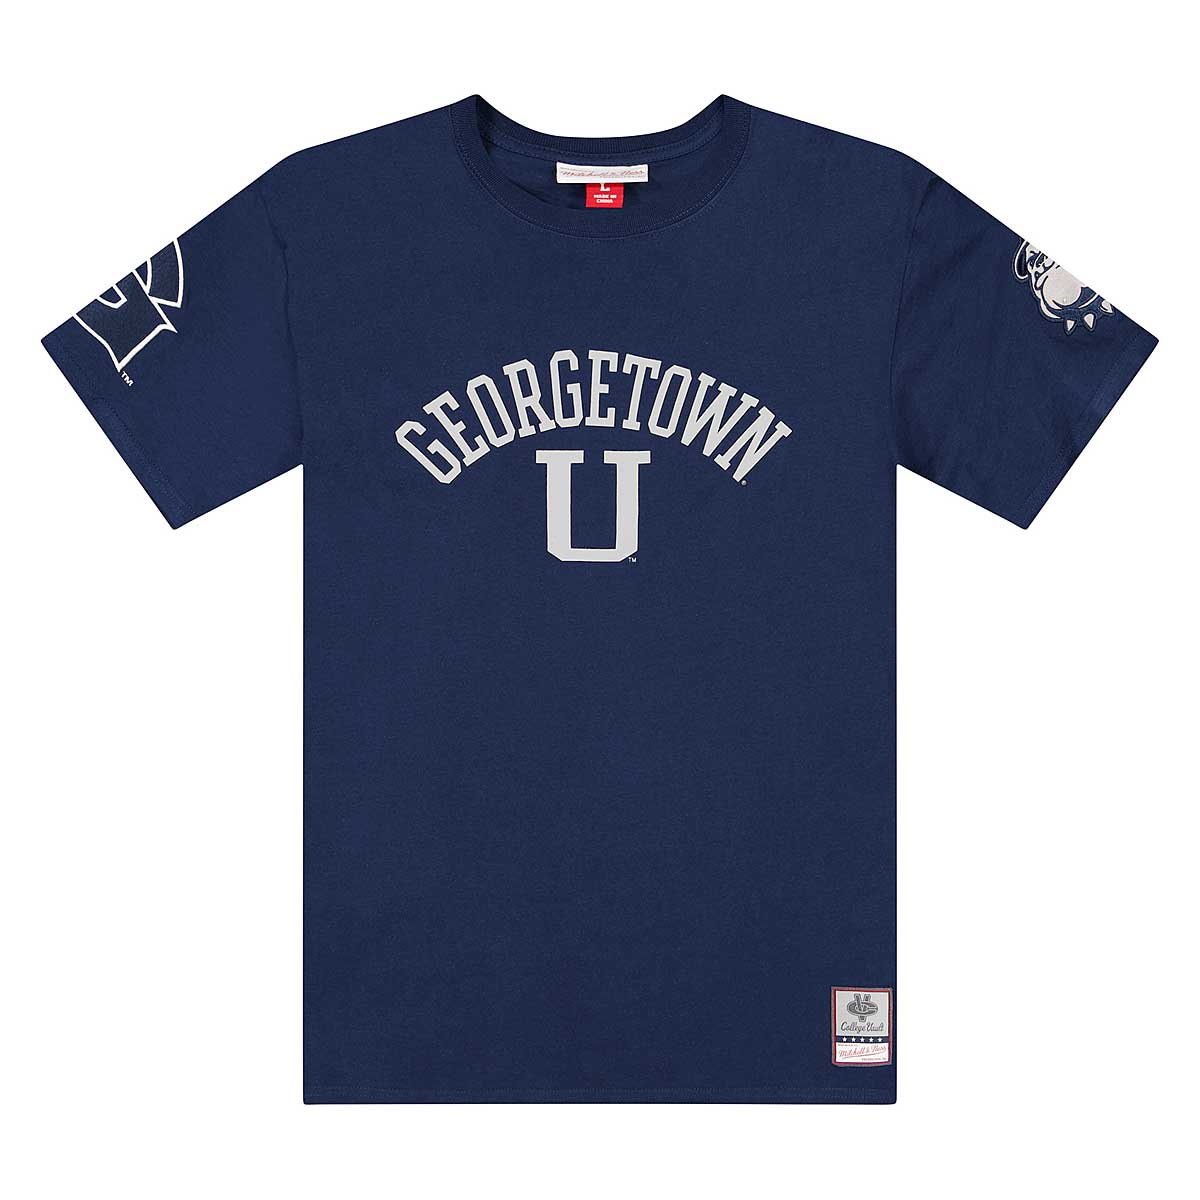 Mitchell And Ness Ncaa Georgetown University Champ City T-Shirt, Navy